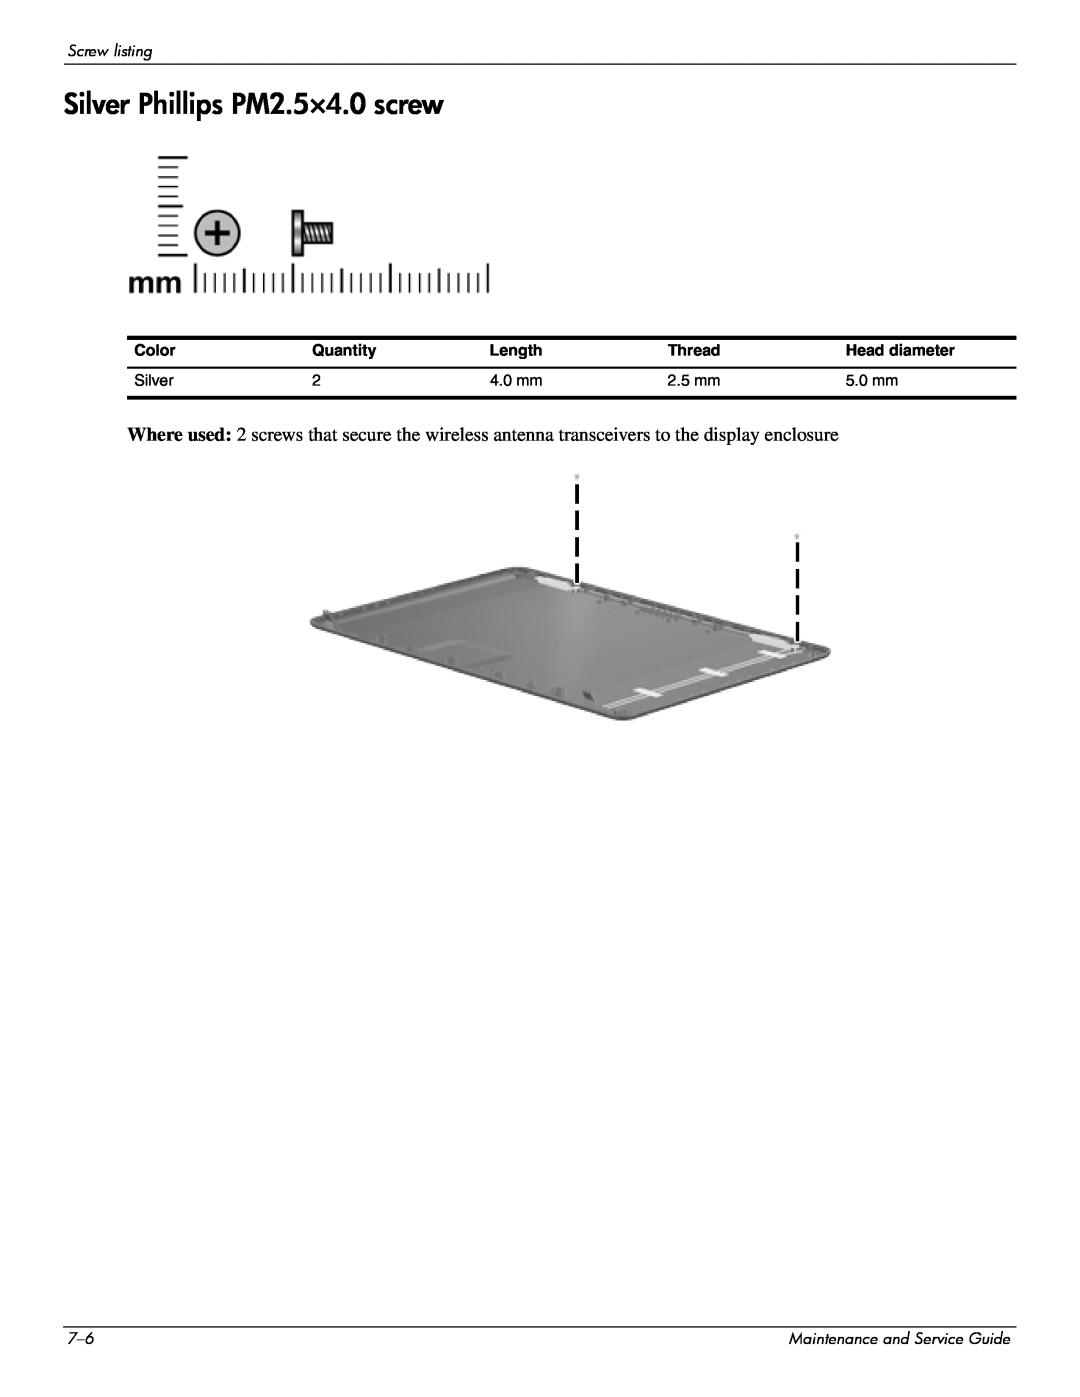 Compaq 515, 511 Silver Phillips PM2.5×4.0 screw, Color, Quantity, Length, Thread, Head diameter, 4.0 mm, 2.5 mm, 5.0 mm 